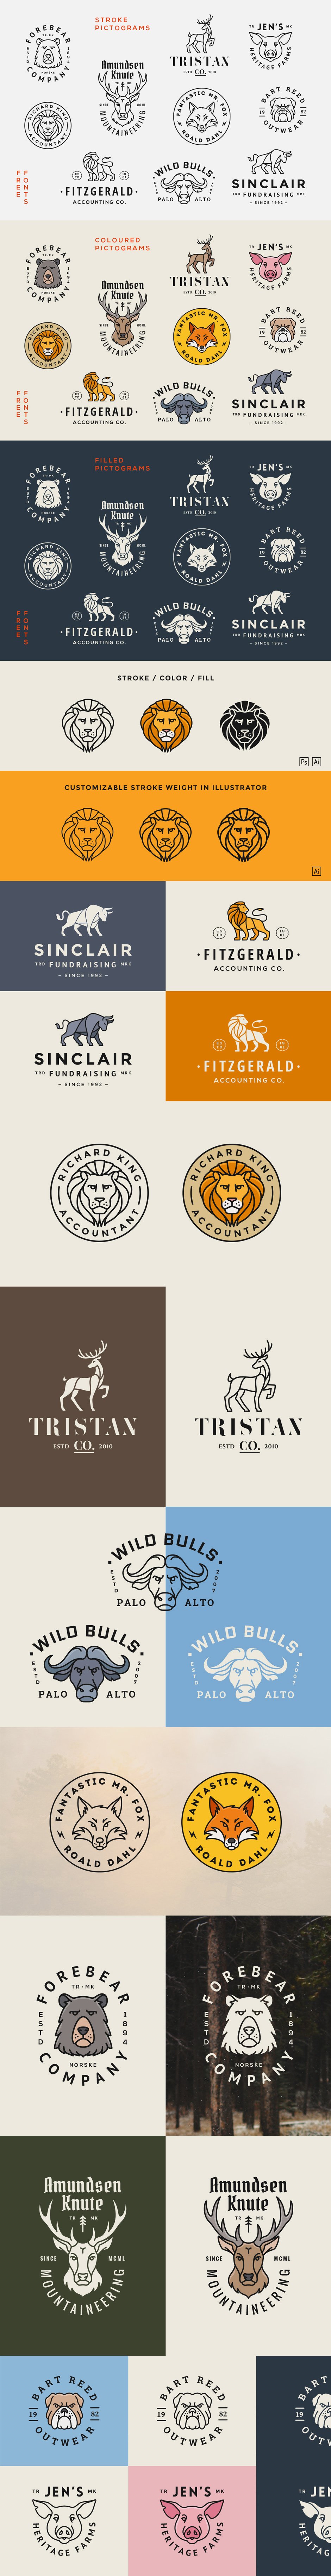 Animal Logo Badge Templates Vol. 1